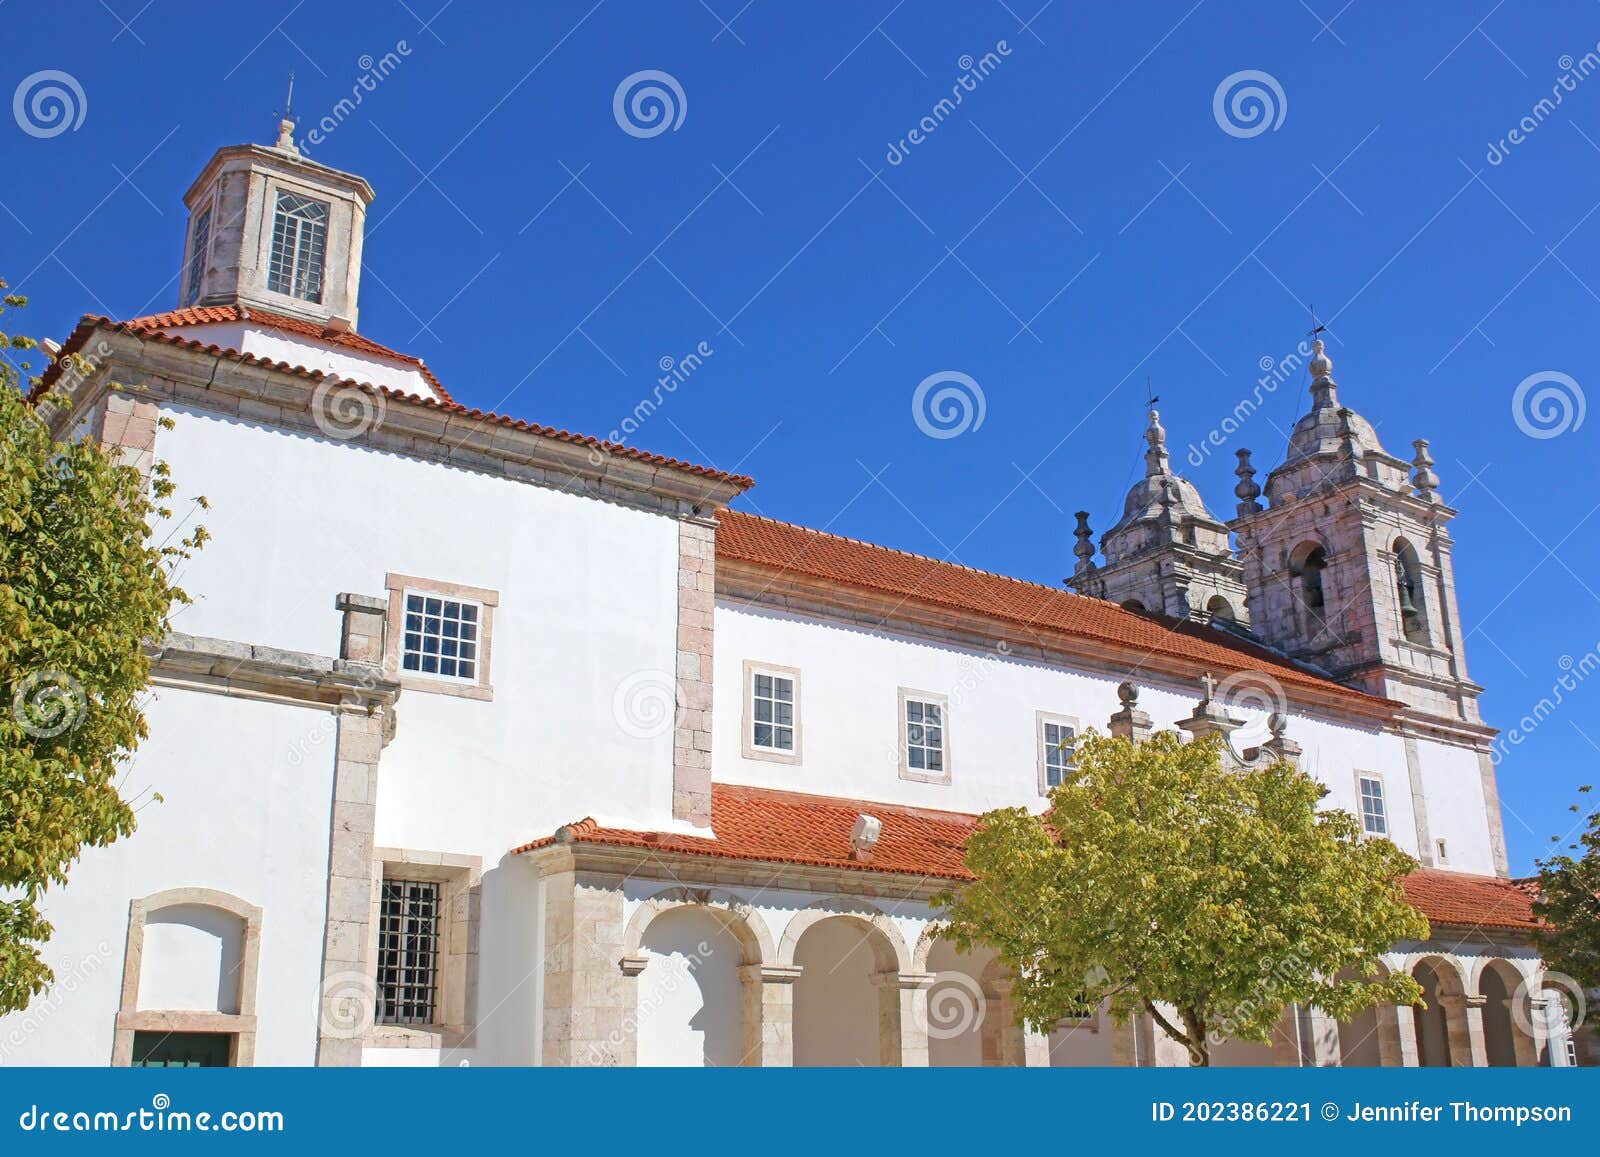 church of nossa senhora da nazare, sitio, portugal